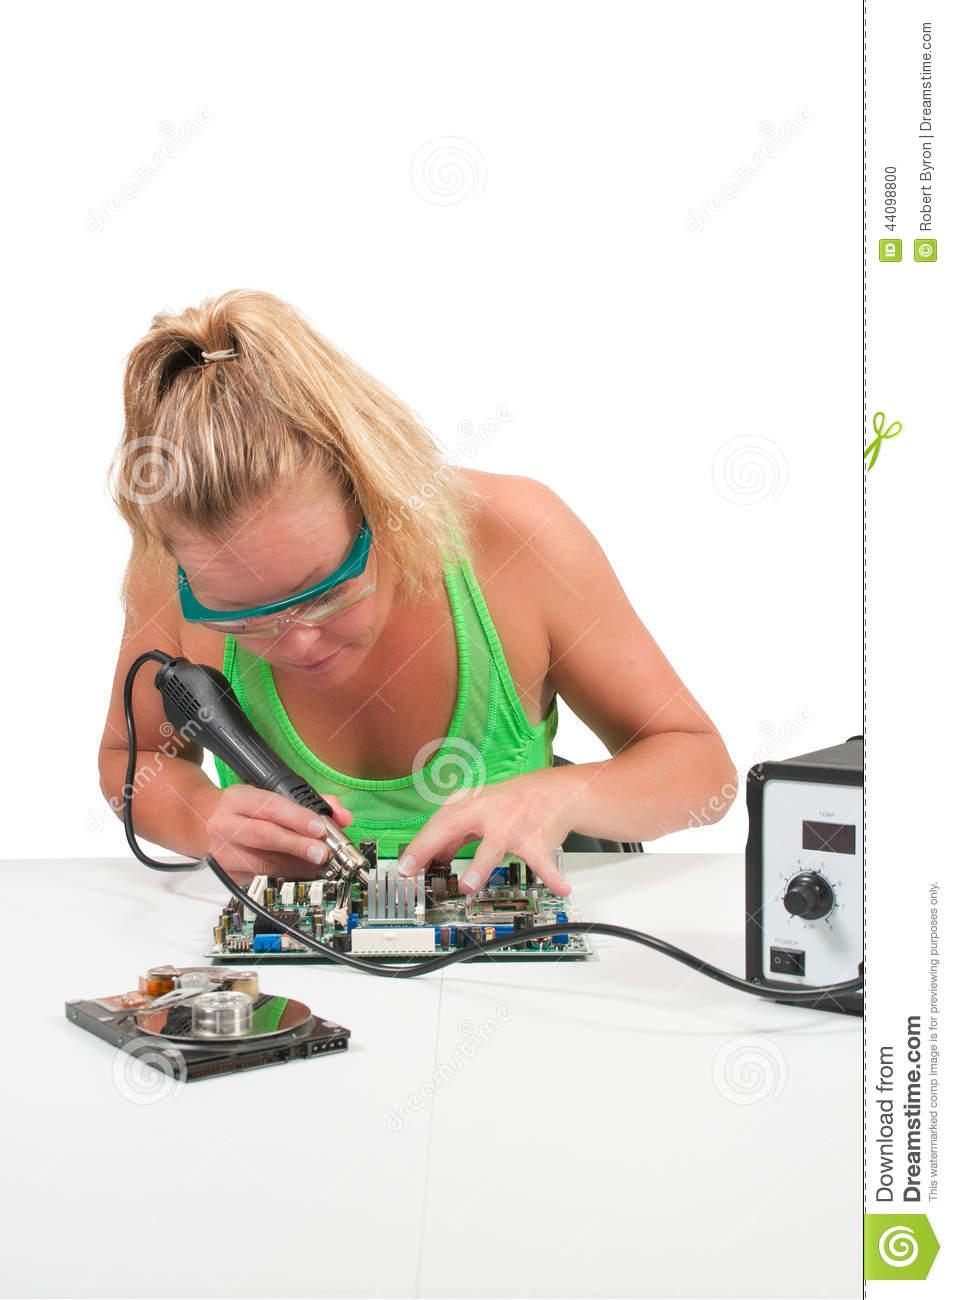 woman-soldering-beautiful-repairing-printed-circuit-board-forced-air-iron-44098800.jpg